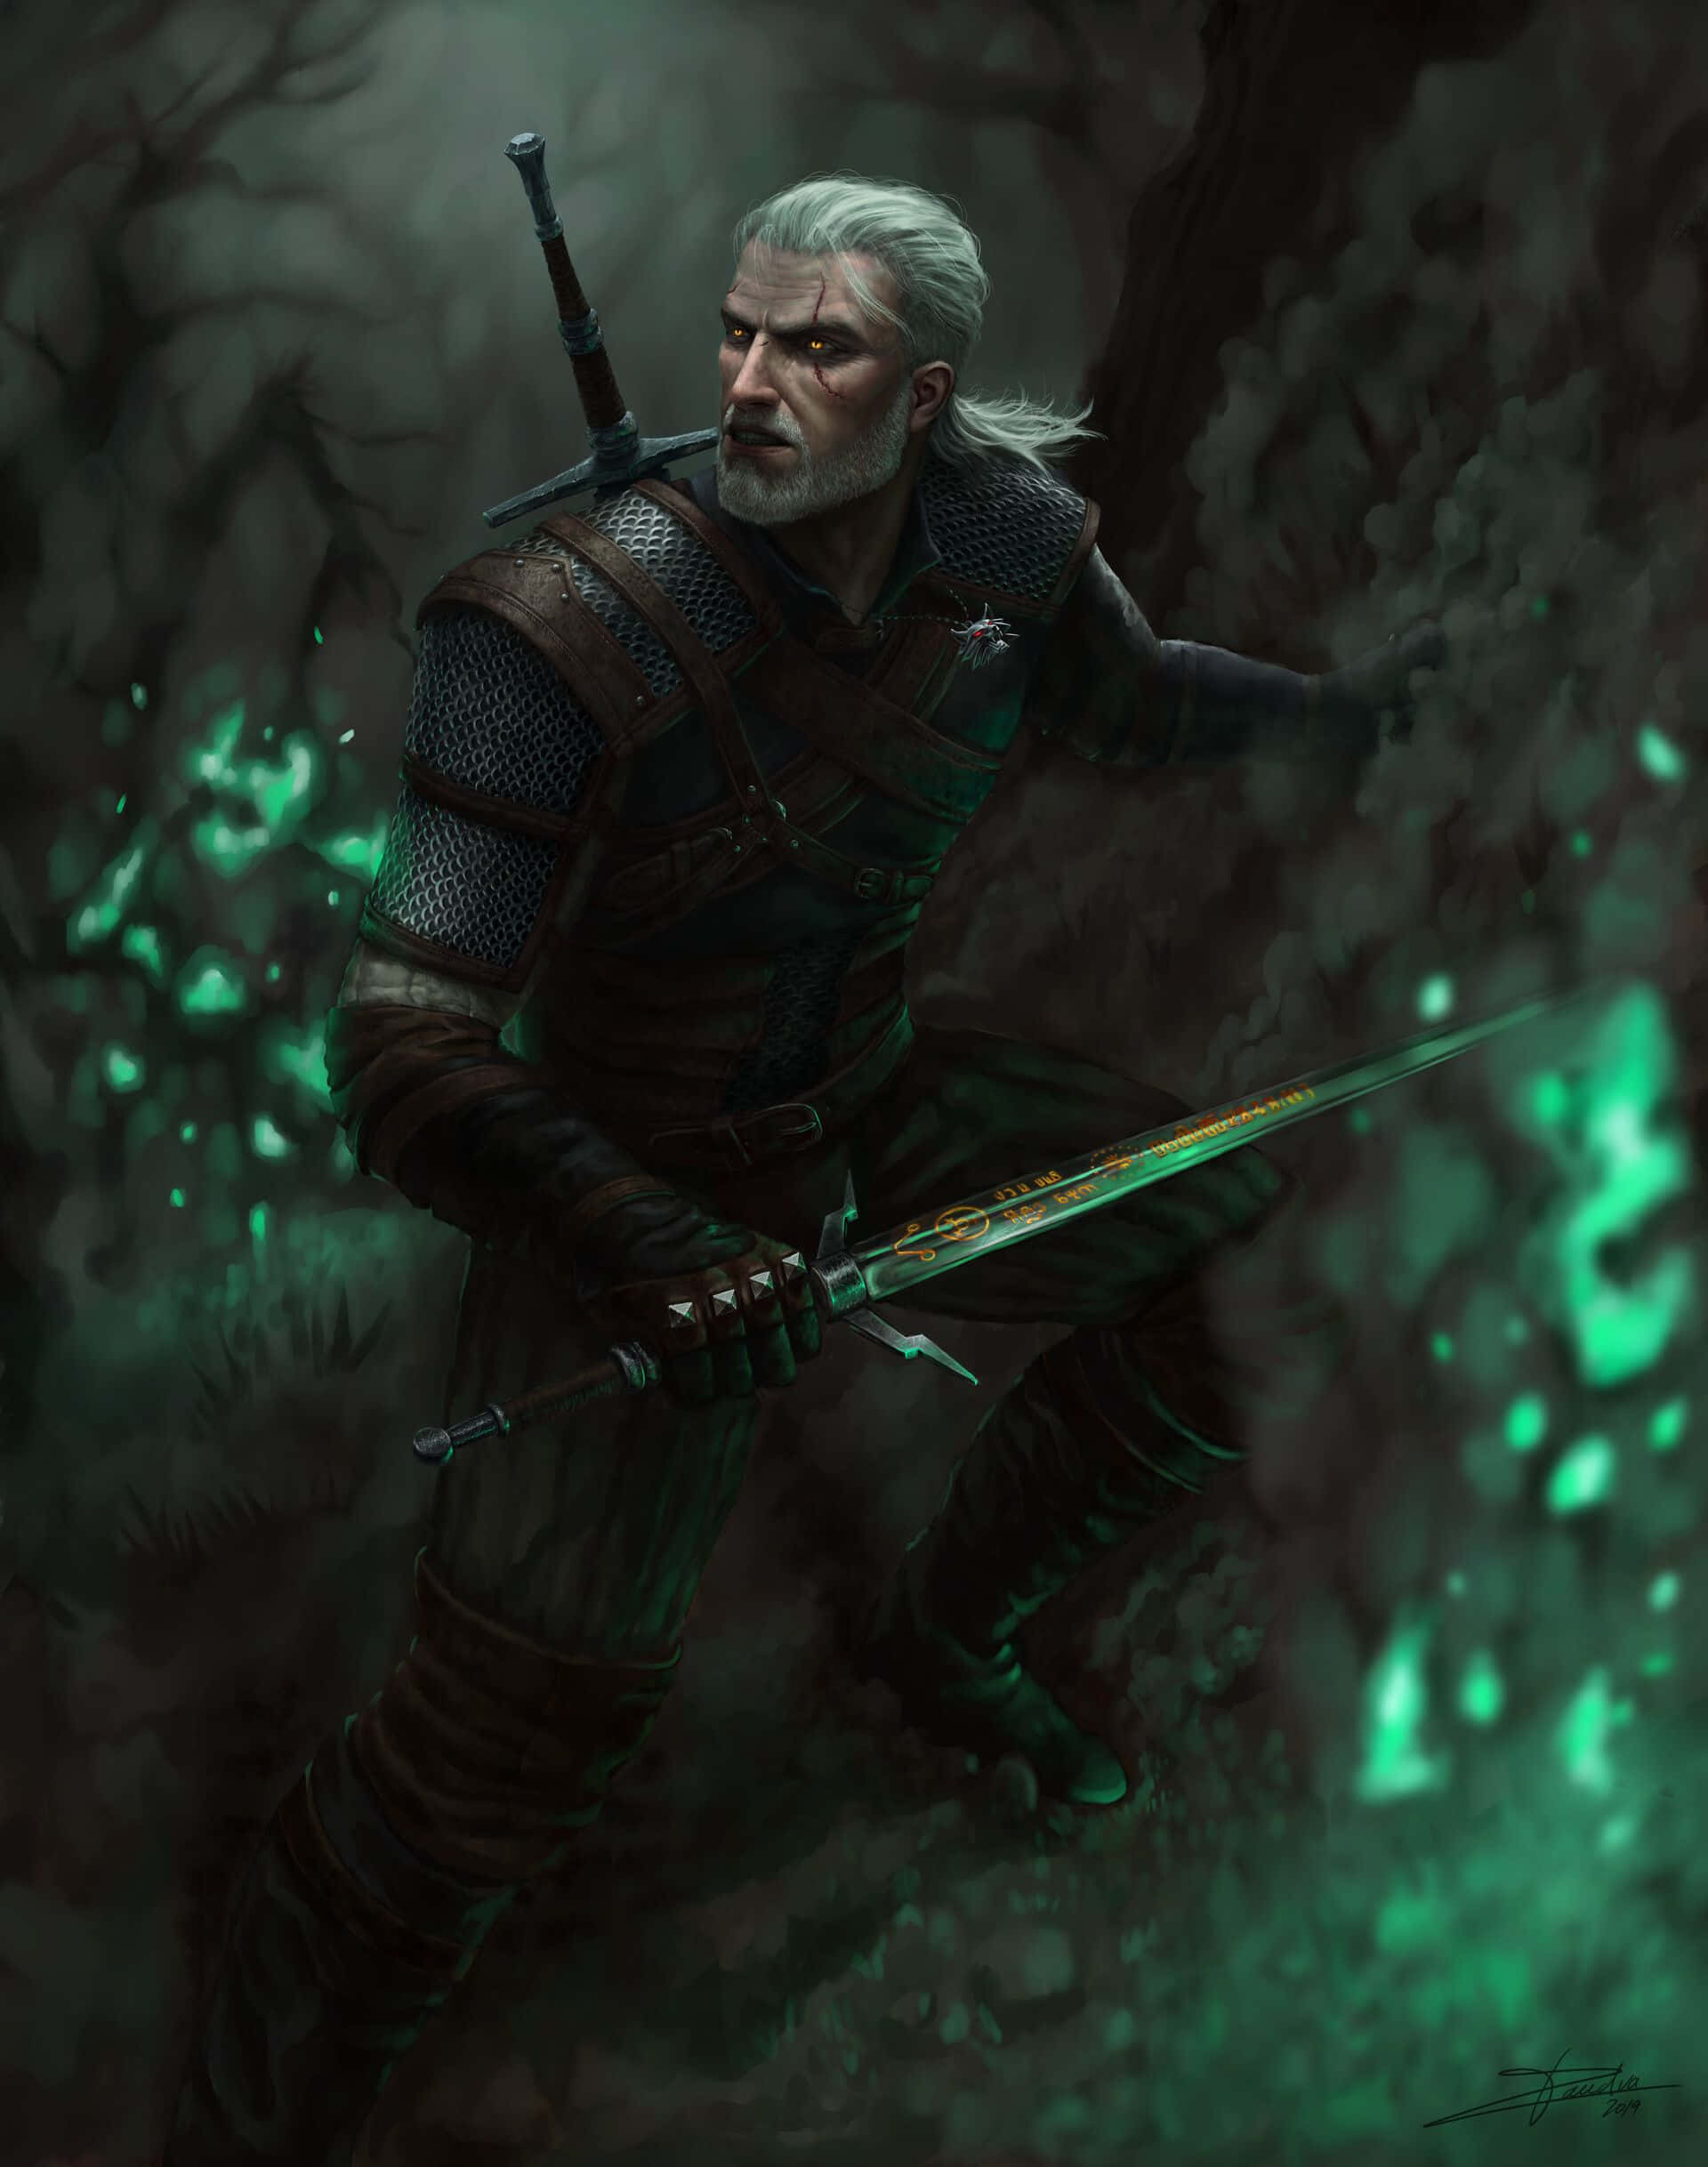 A Fiercely Intense Geralt Of Rivia Full Photo View Wallpaper